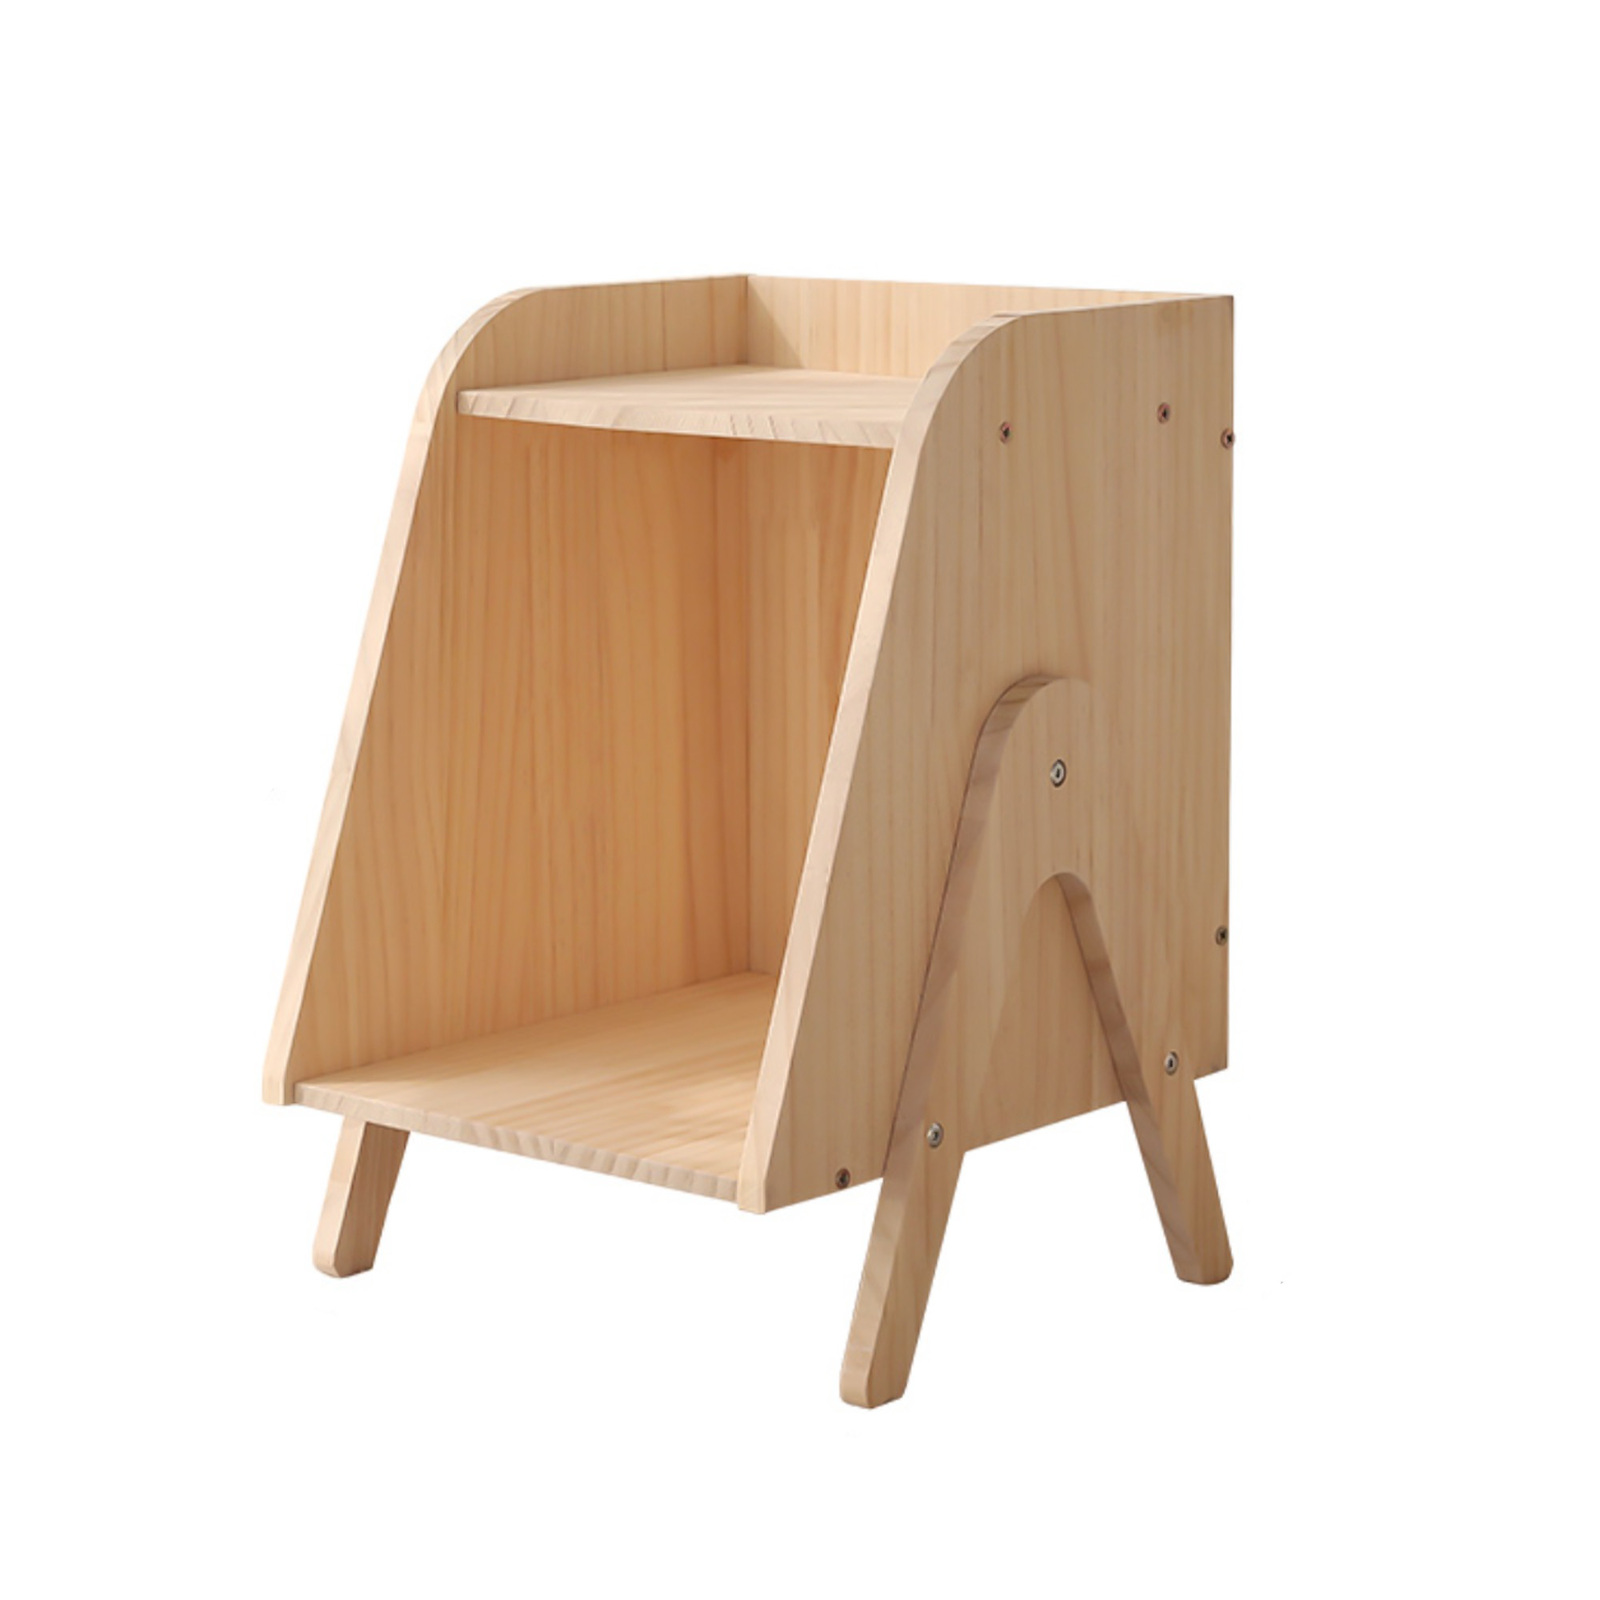 Solid Wood End Table Side Storage Shelf Bedside Table Bedroom Nightstand